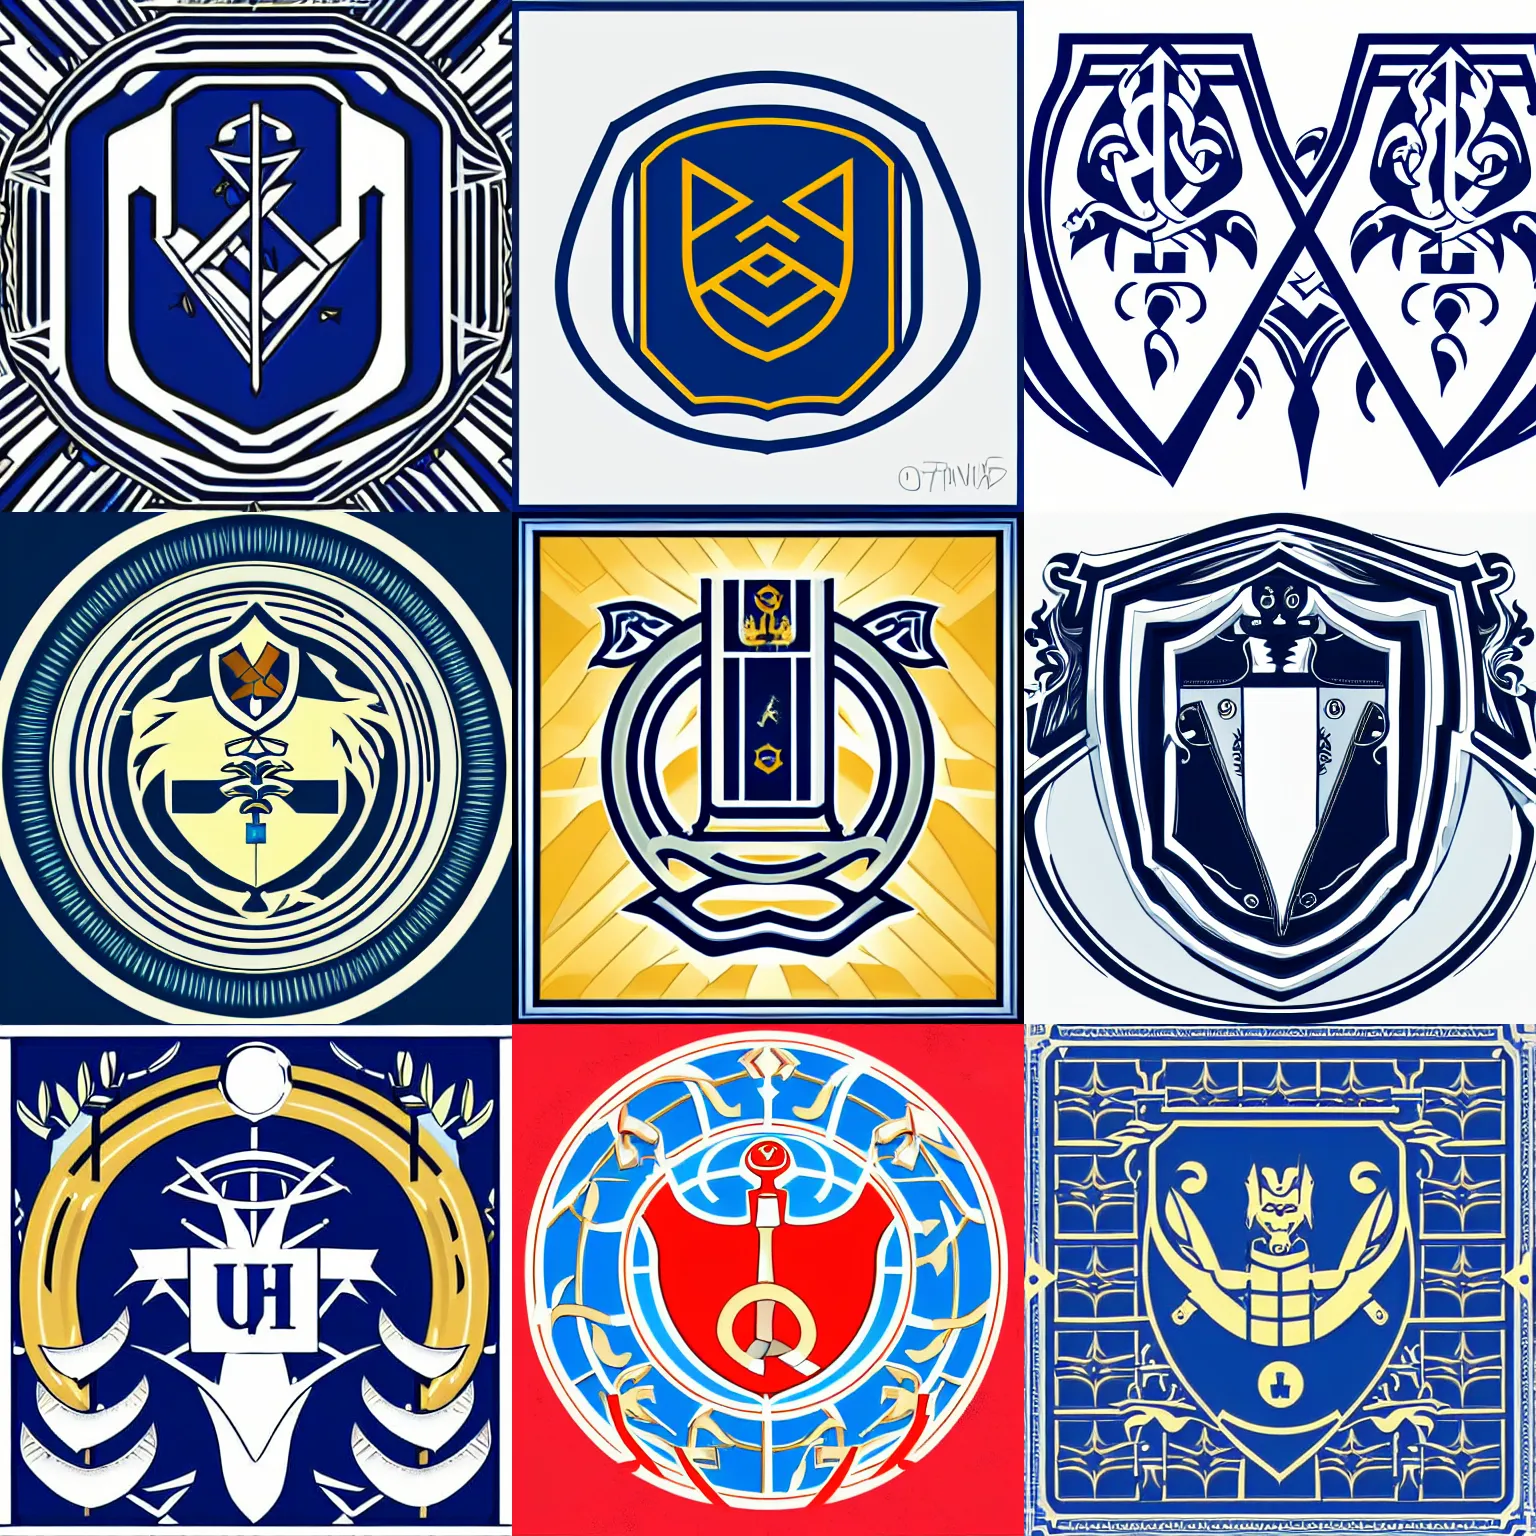 Prompt: heraldic emblem portraying crataegus, corporate logo, art deco, stylized, iconic, vector art, two - tone, clean lines, ultramarine blue and titanium white